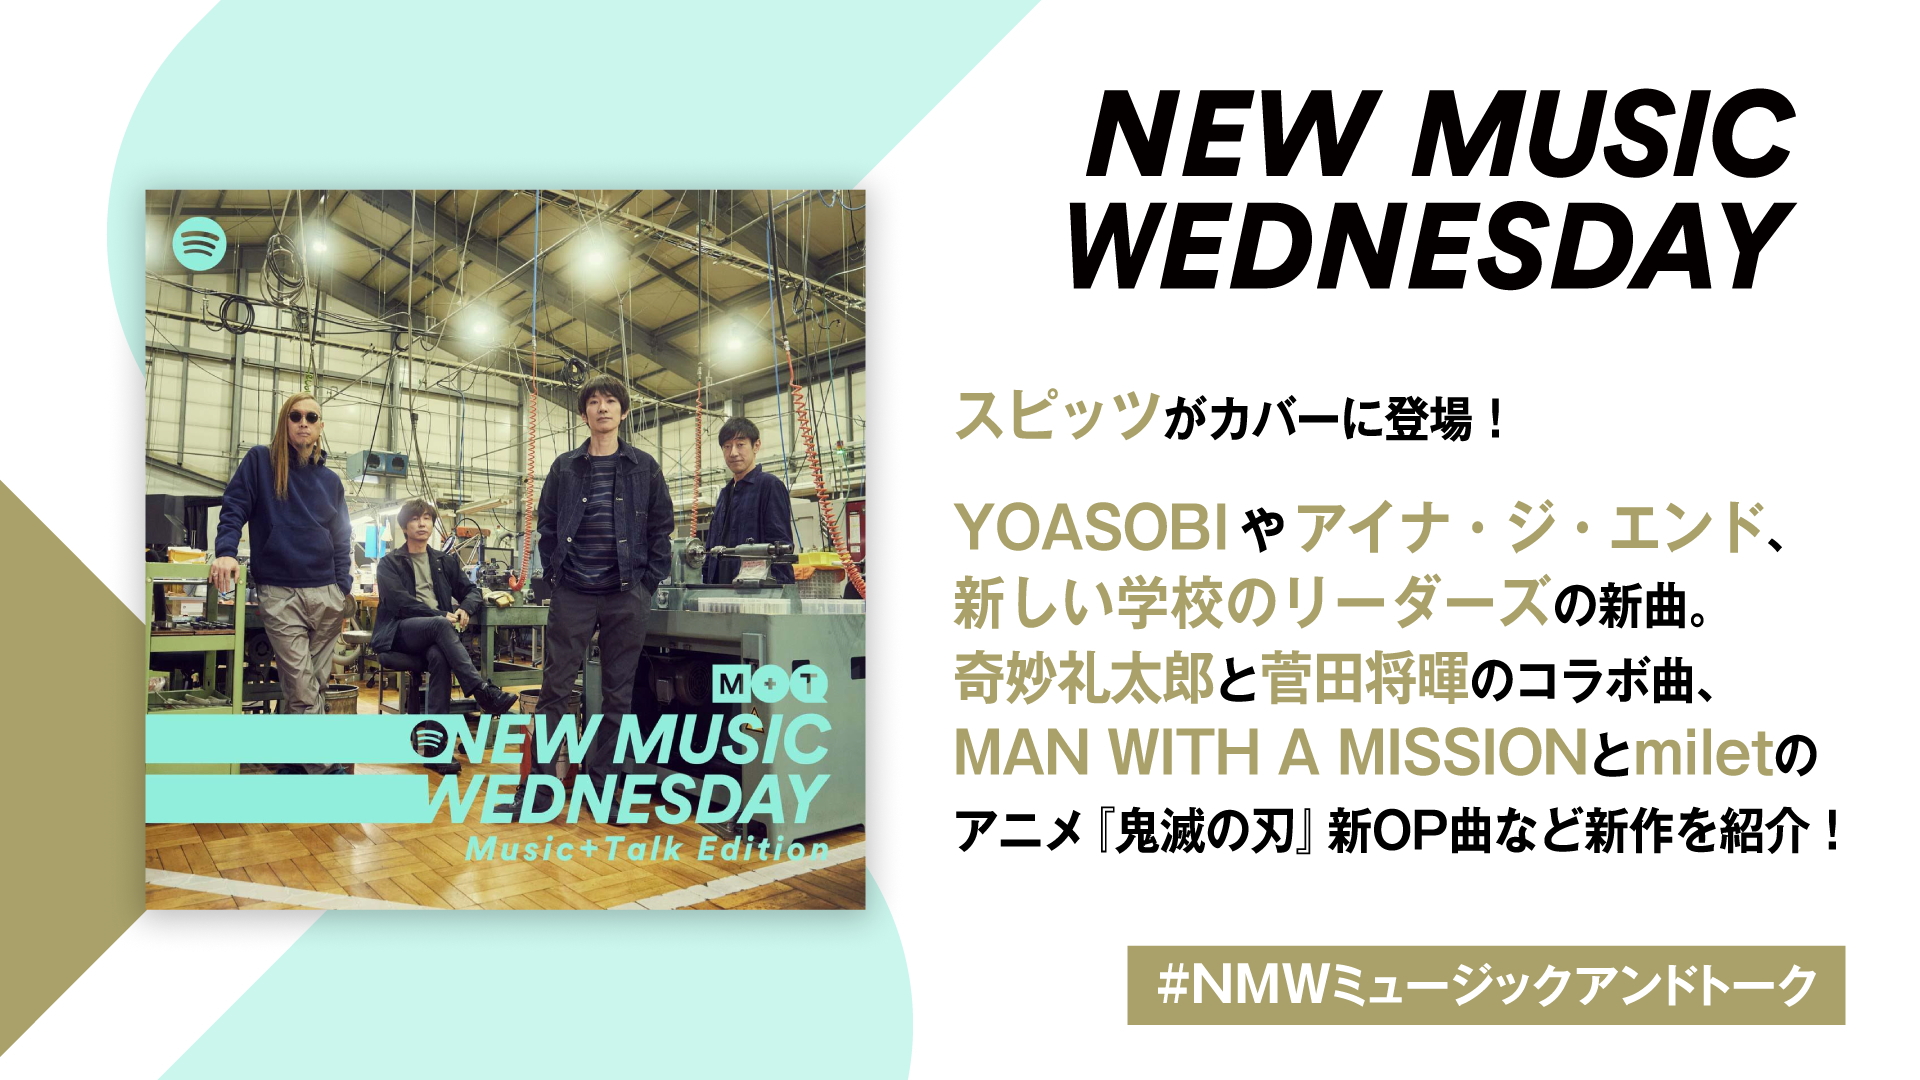 New Music Wednesday [Music+Talk Edition]